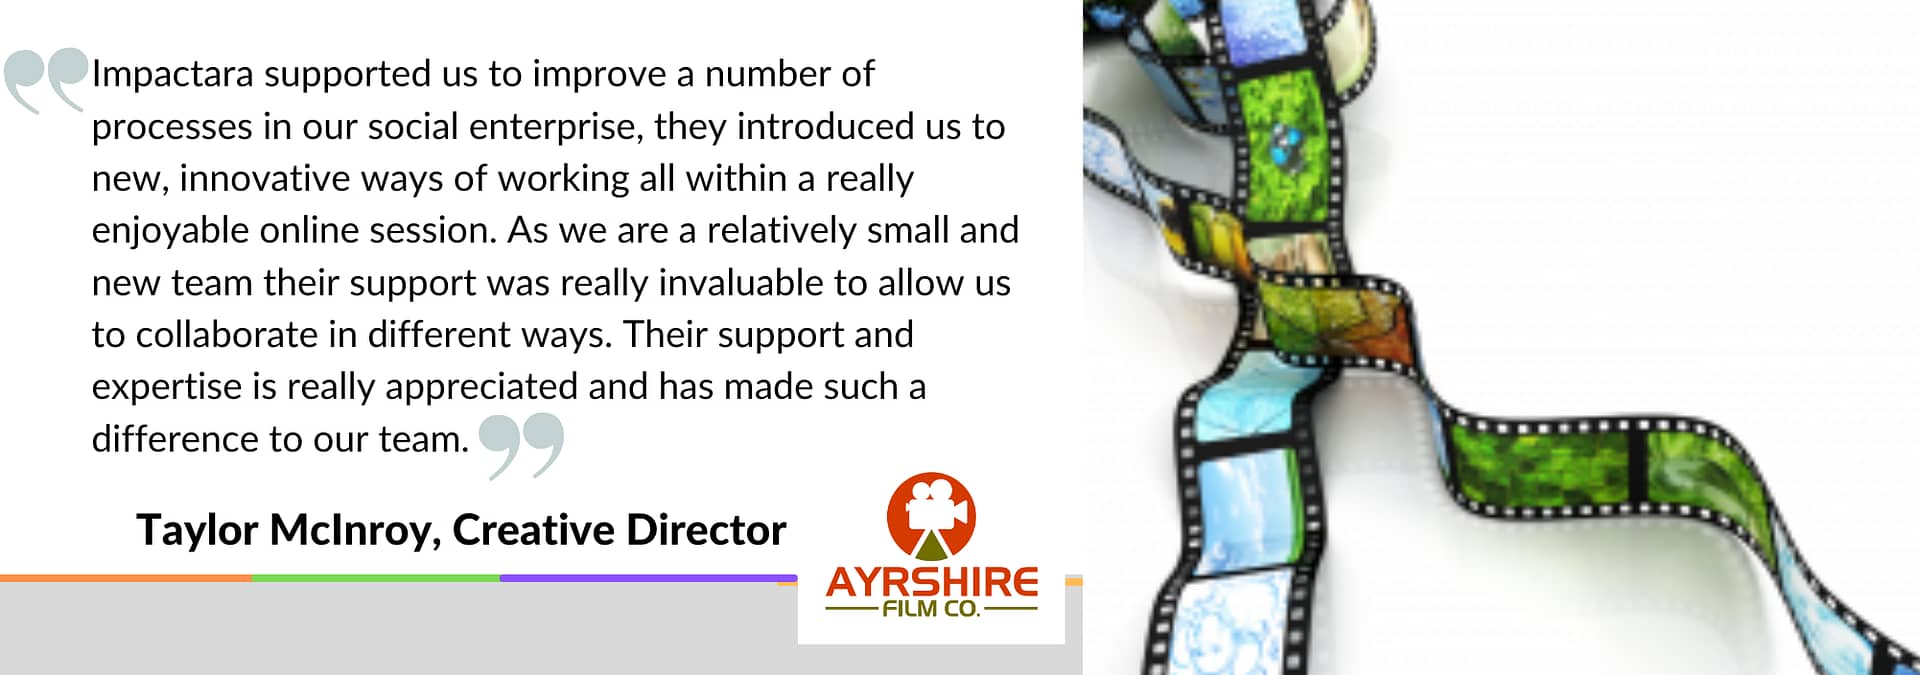 Ayrshire Film Co testimonial for Impactara